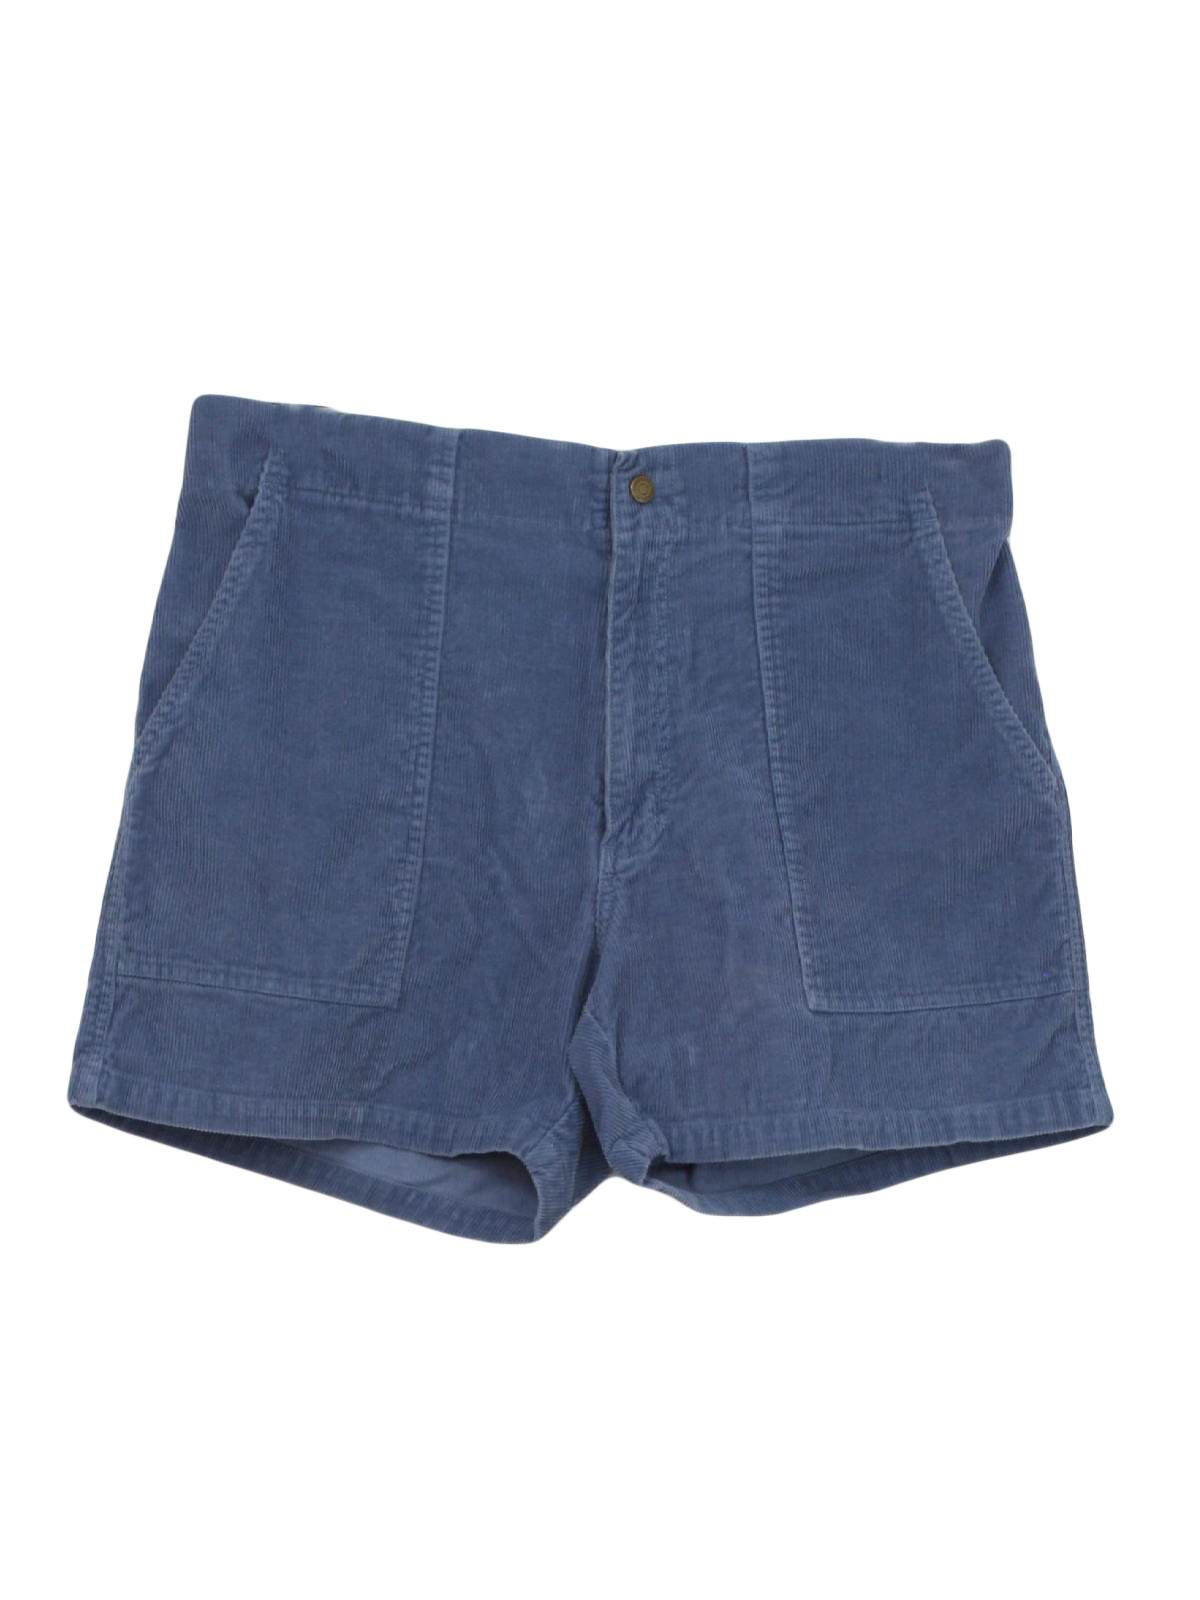 Retro Eighties Shorts: 80s -Towncraft- Mens blue cotton corduroy ...